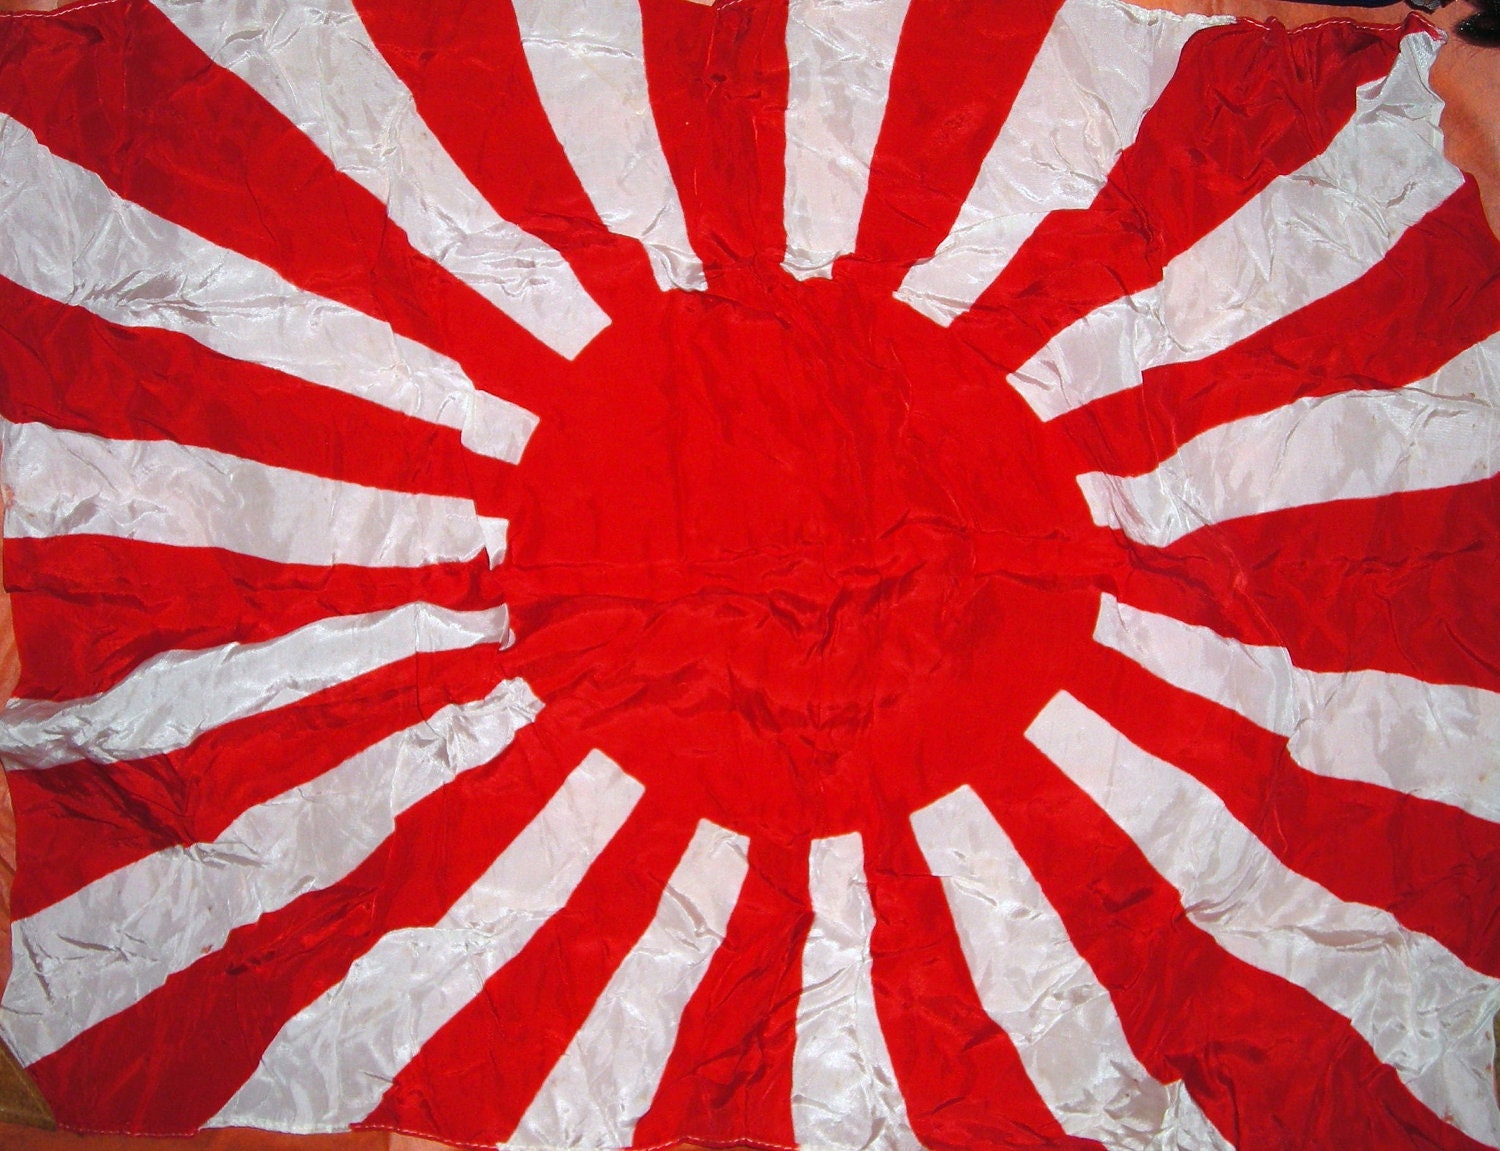 Картинки флага японской империи